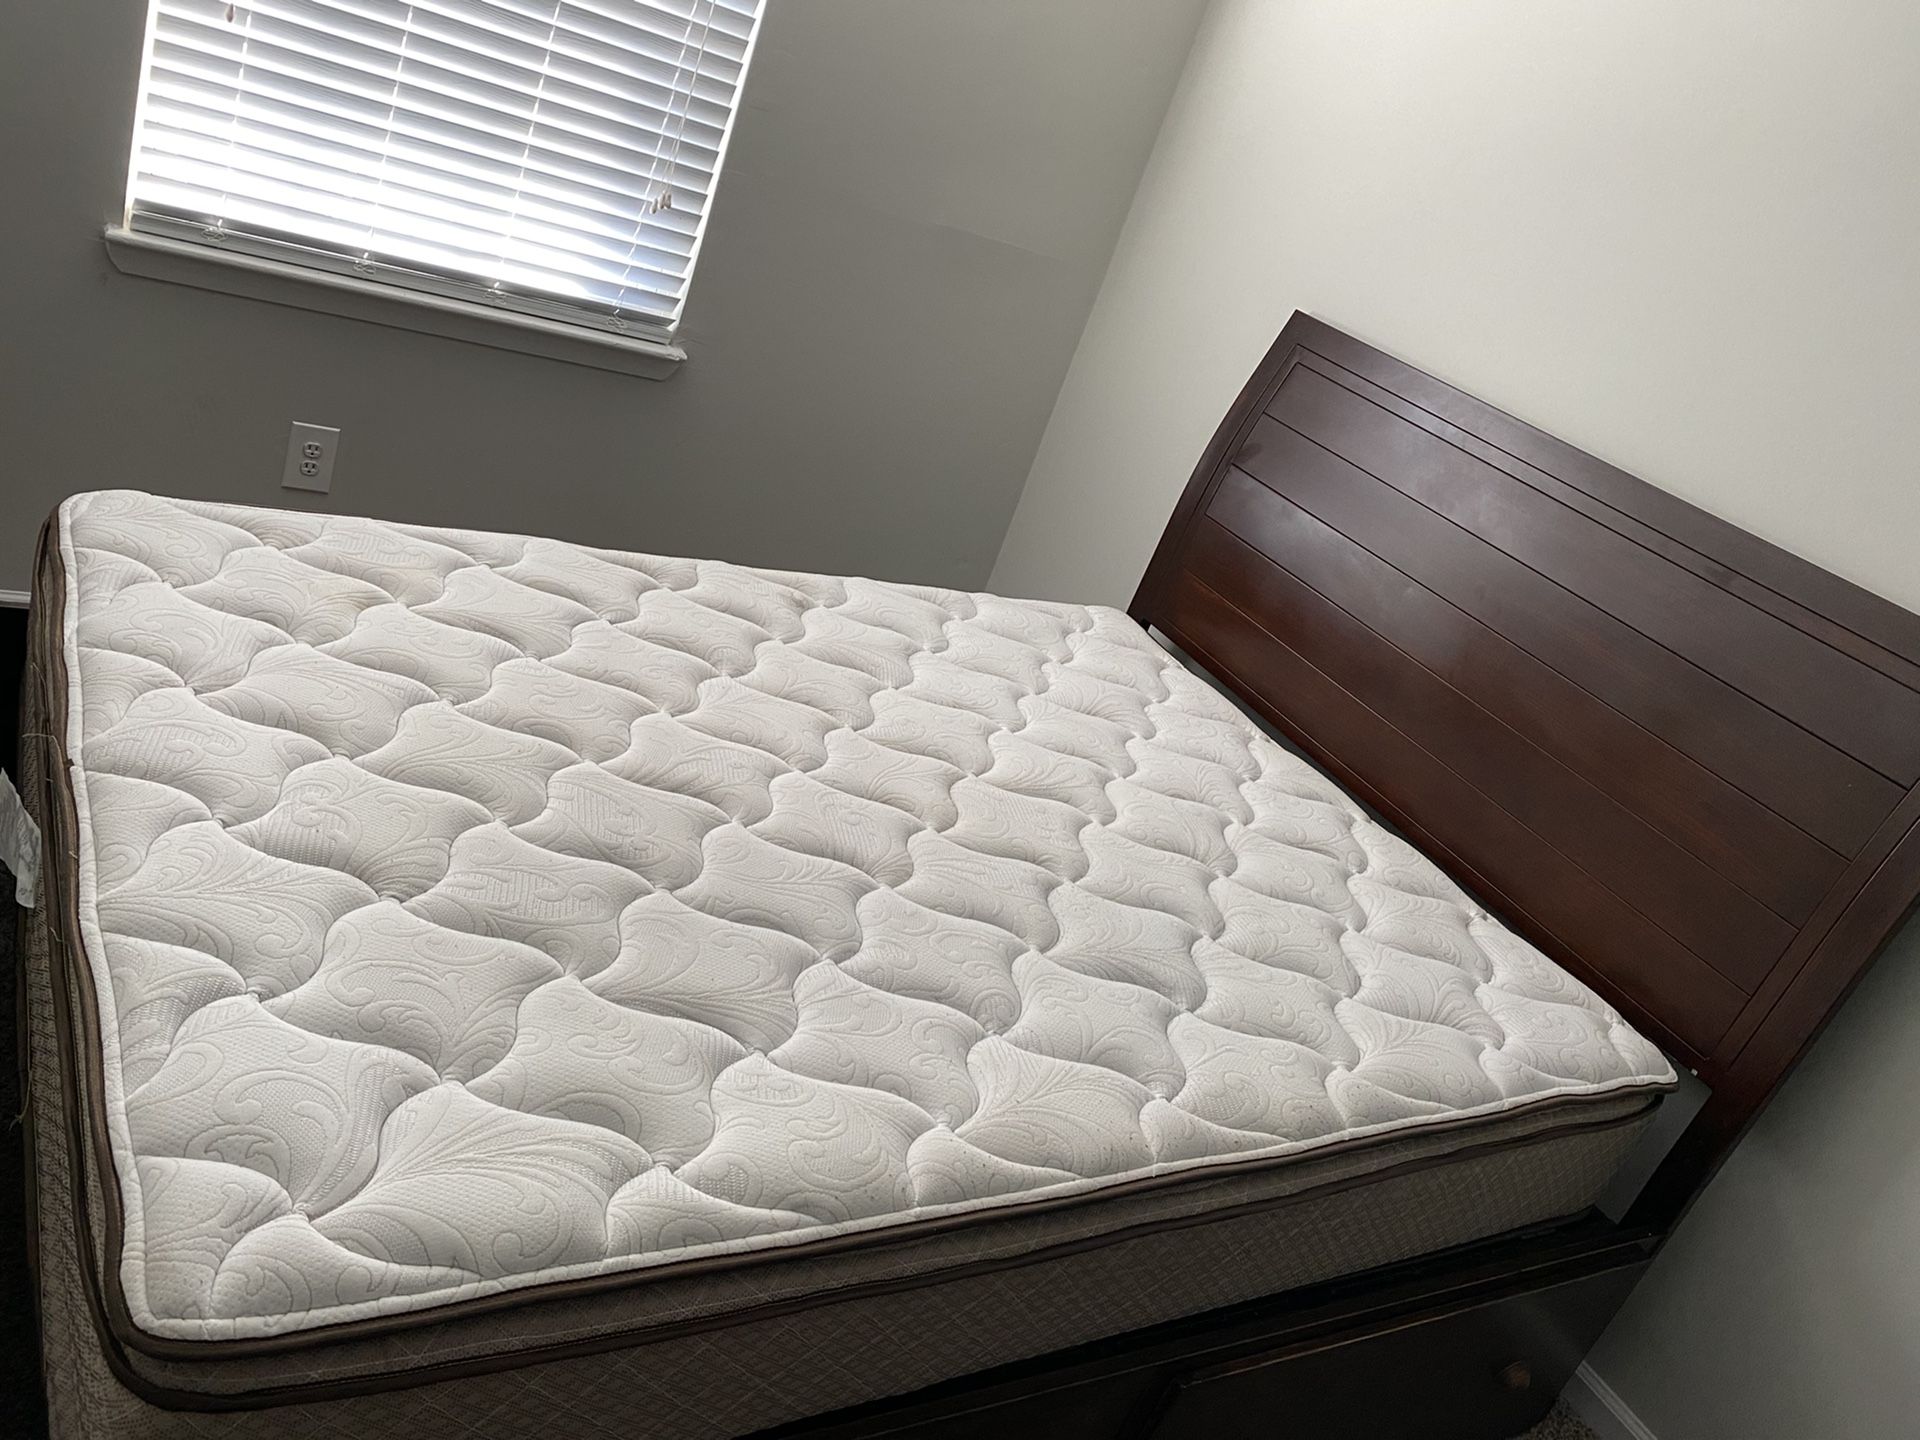 Queen Size Bed, mattress, bed frame